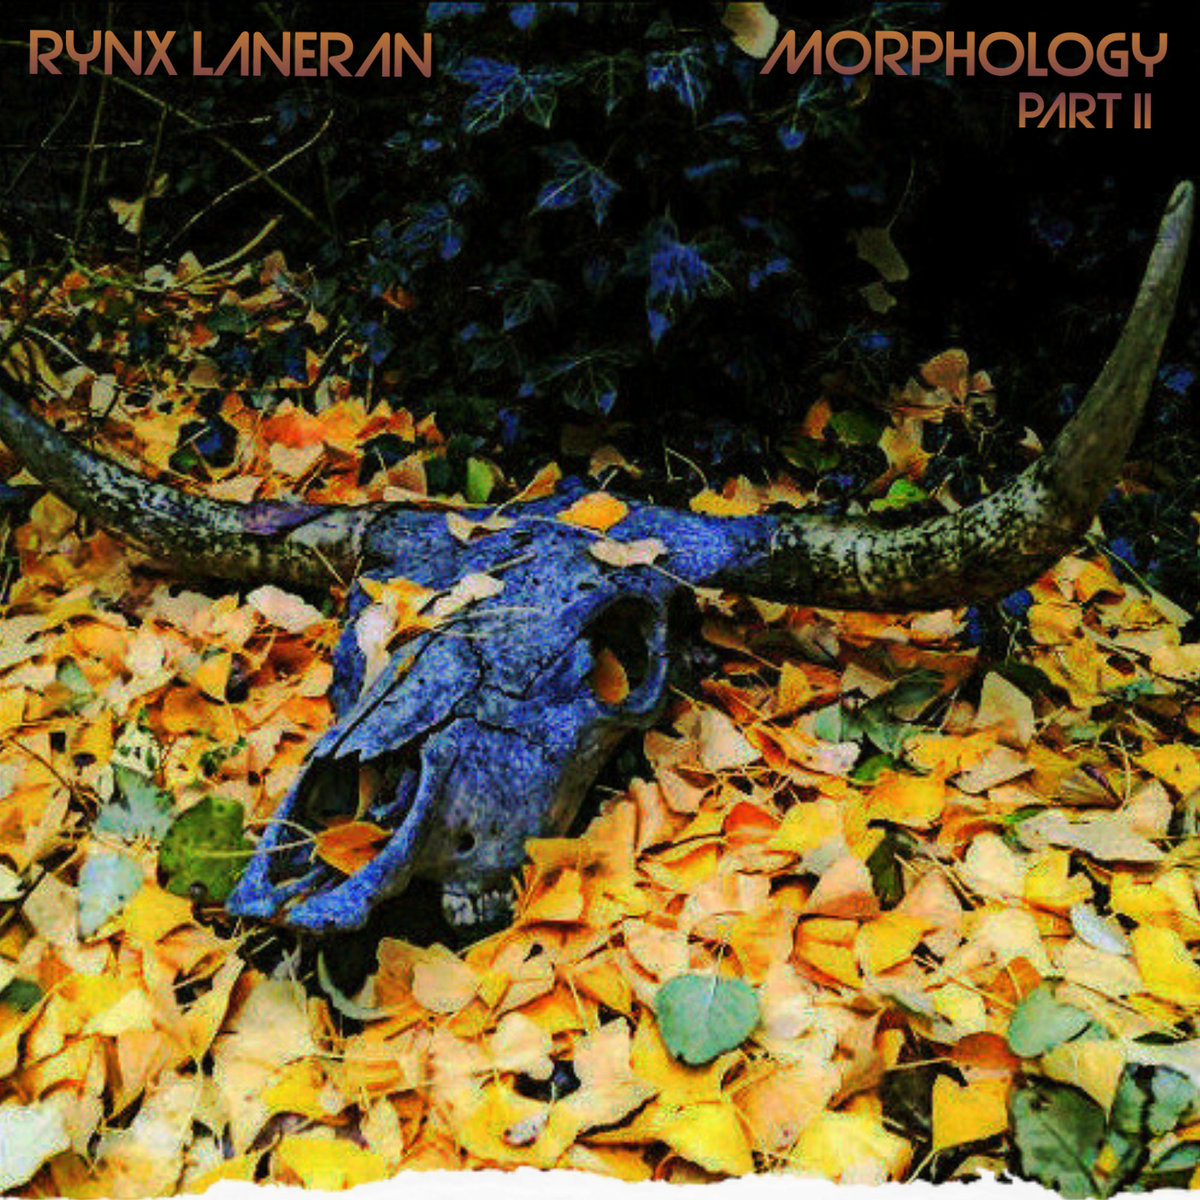 New EP Release “Morphology Pt.2” from Rynx Laneran